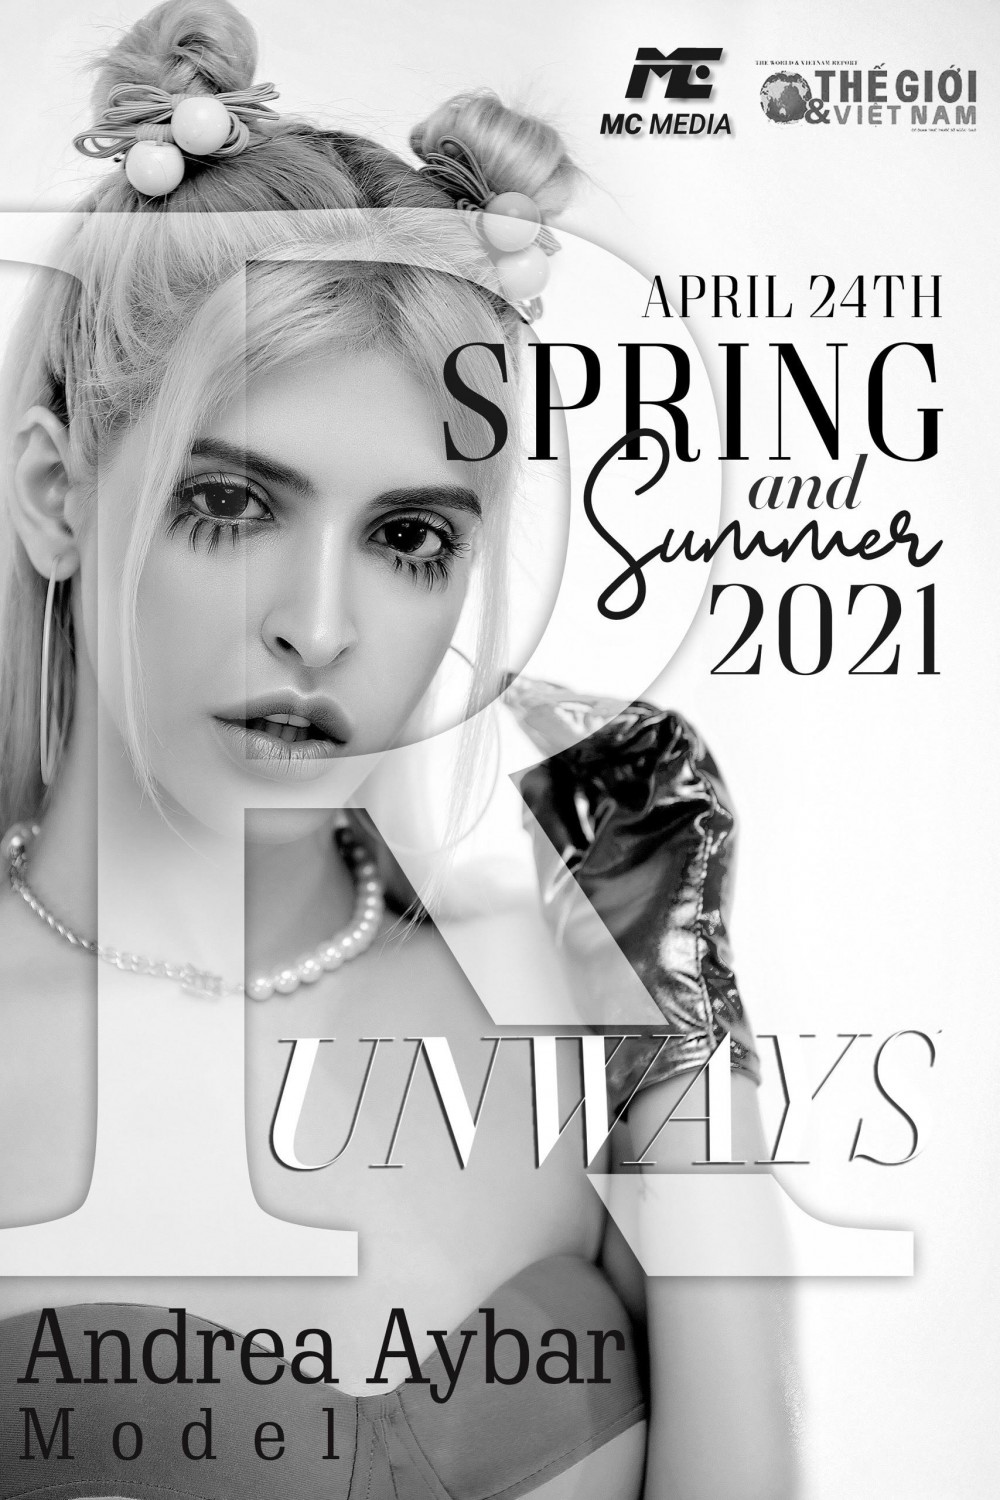 Launching Fashion Runway Spring - Summer 2021